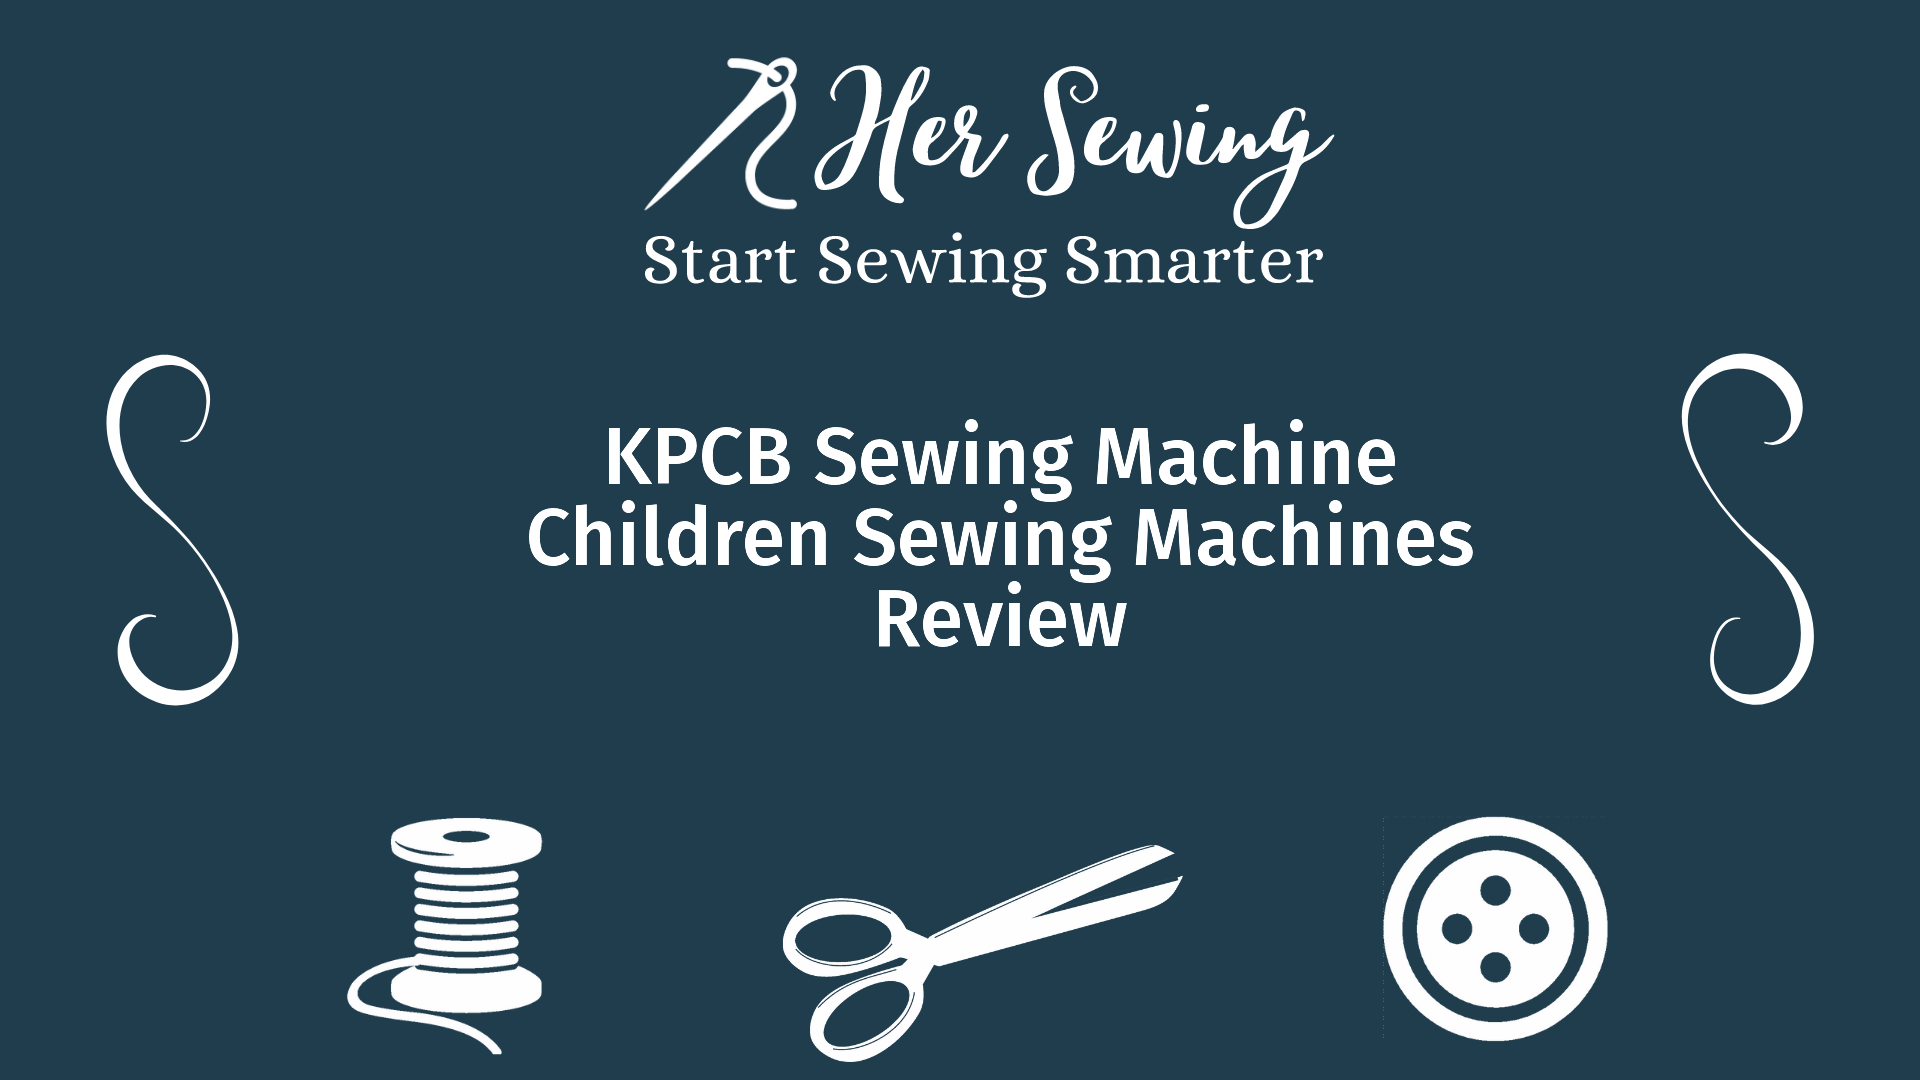 KPCB Sewing Machine Children Sewing Machines Review